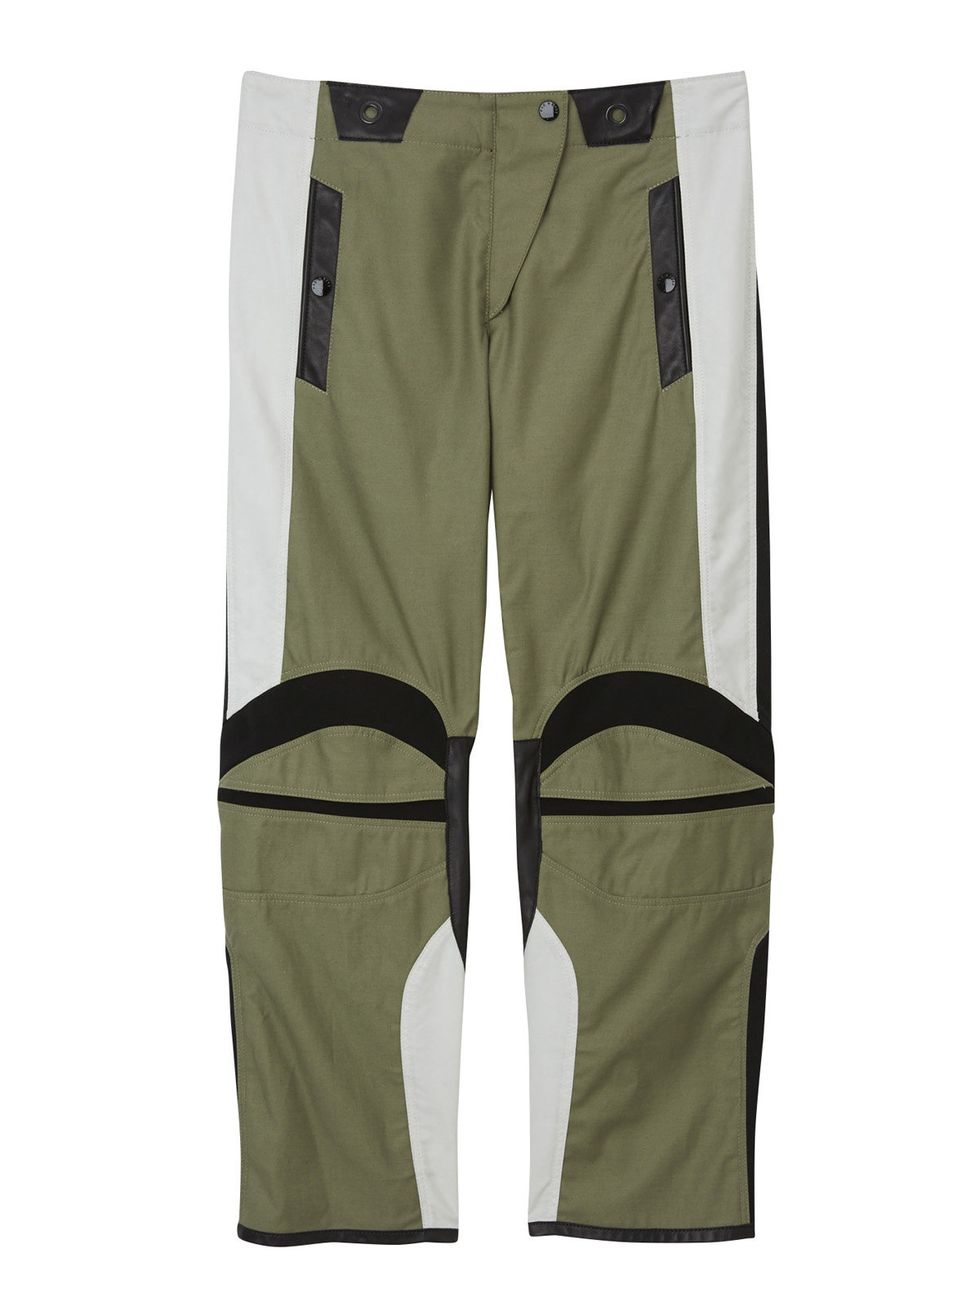 Khaki, Uniform, Style, Pocket, Active shorts, Cargo pants, Bermuda shorts, Camouflage, Active pants, Khaki pants, 